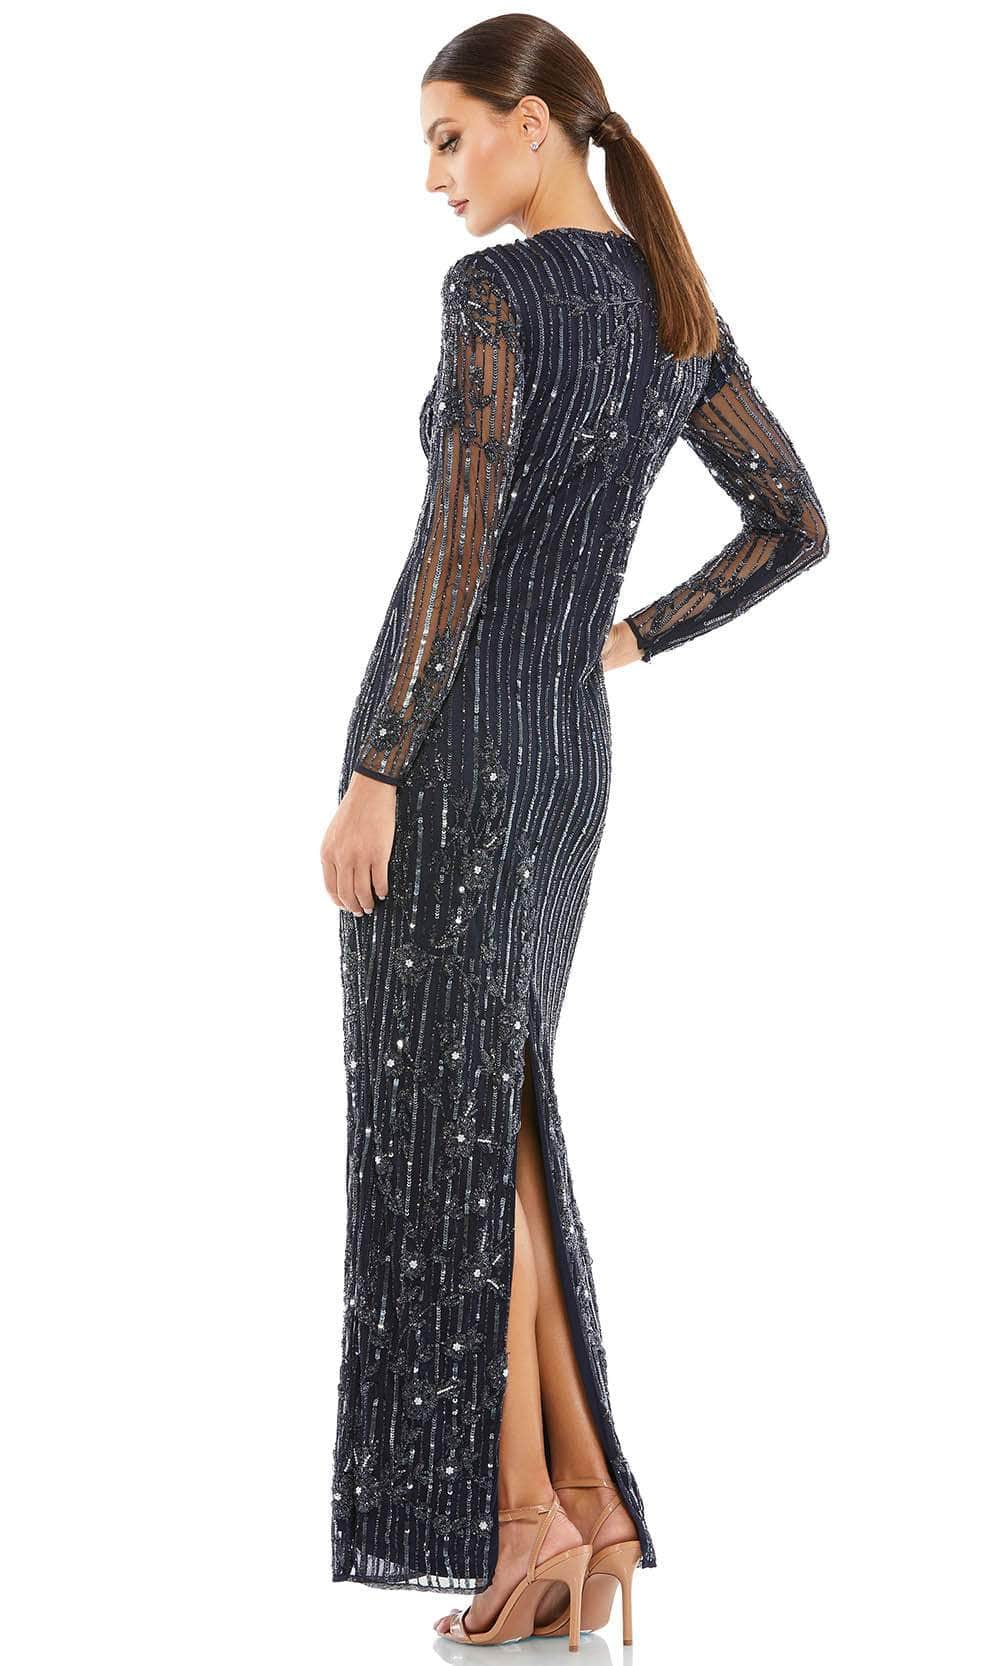 Mac Duggal 93626 - Long Sleeve Jewel Neck Evening Dress Special Occasion Dress